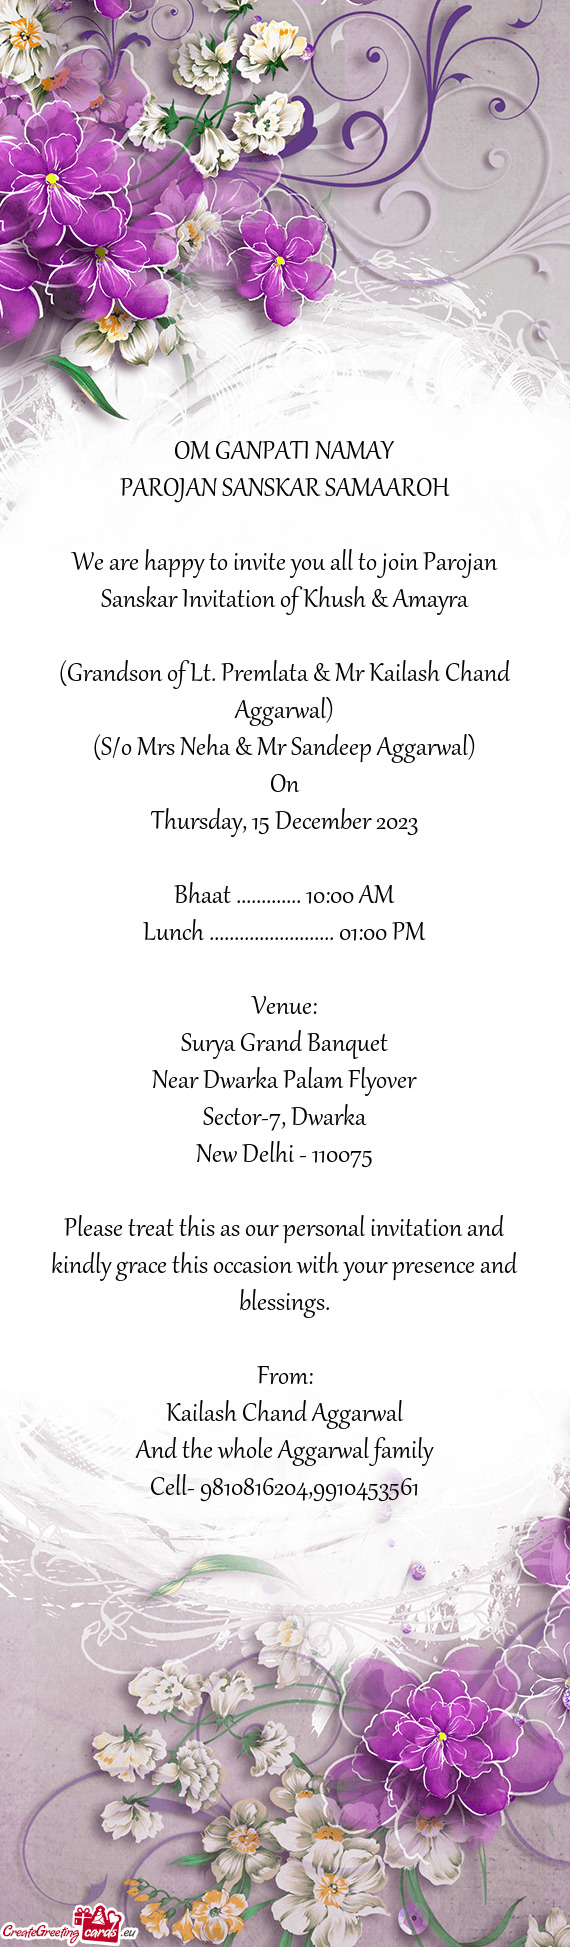 We are happy to invite you all to join Parojan Sanskar Invitation of Khush & Amayra